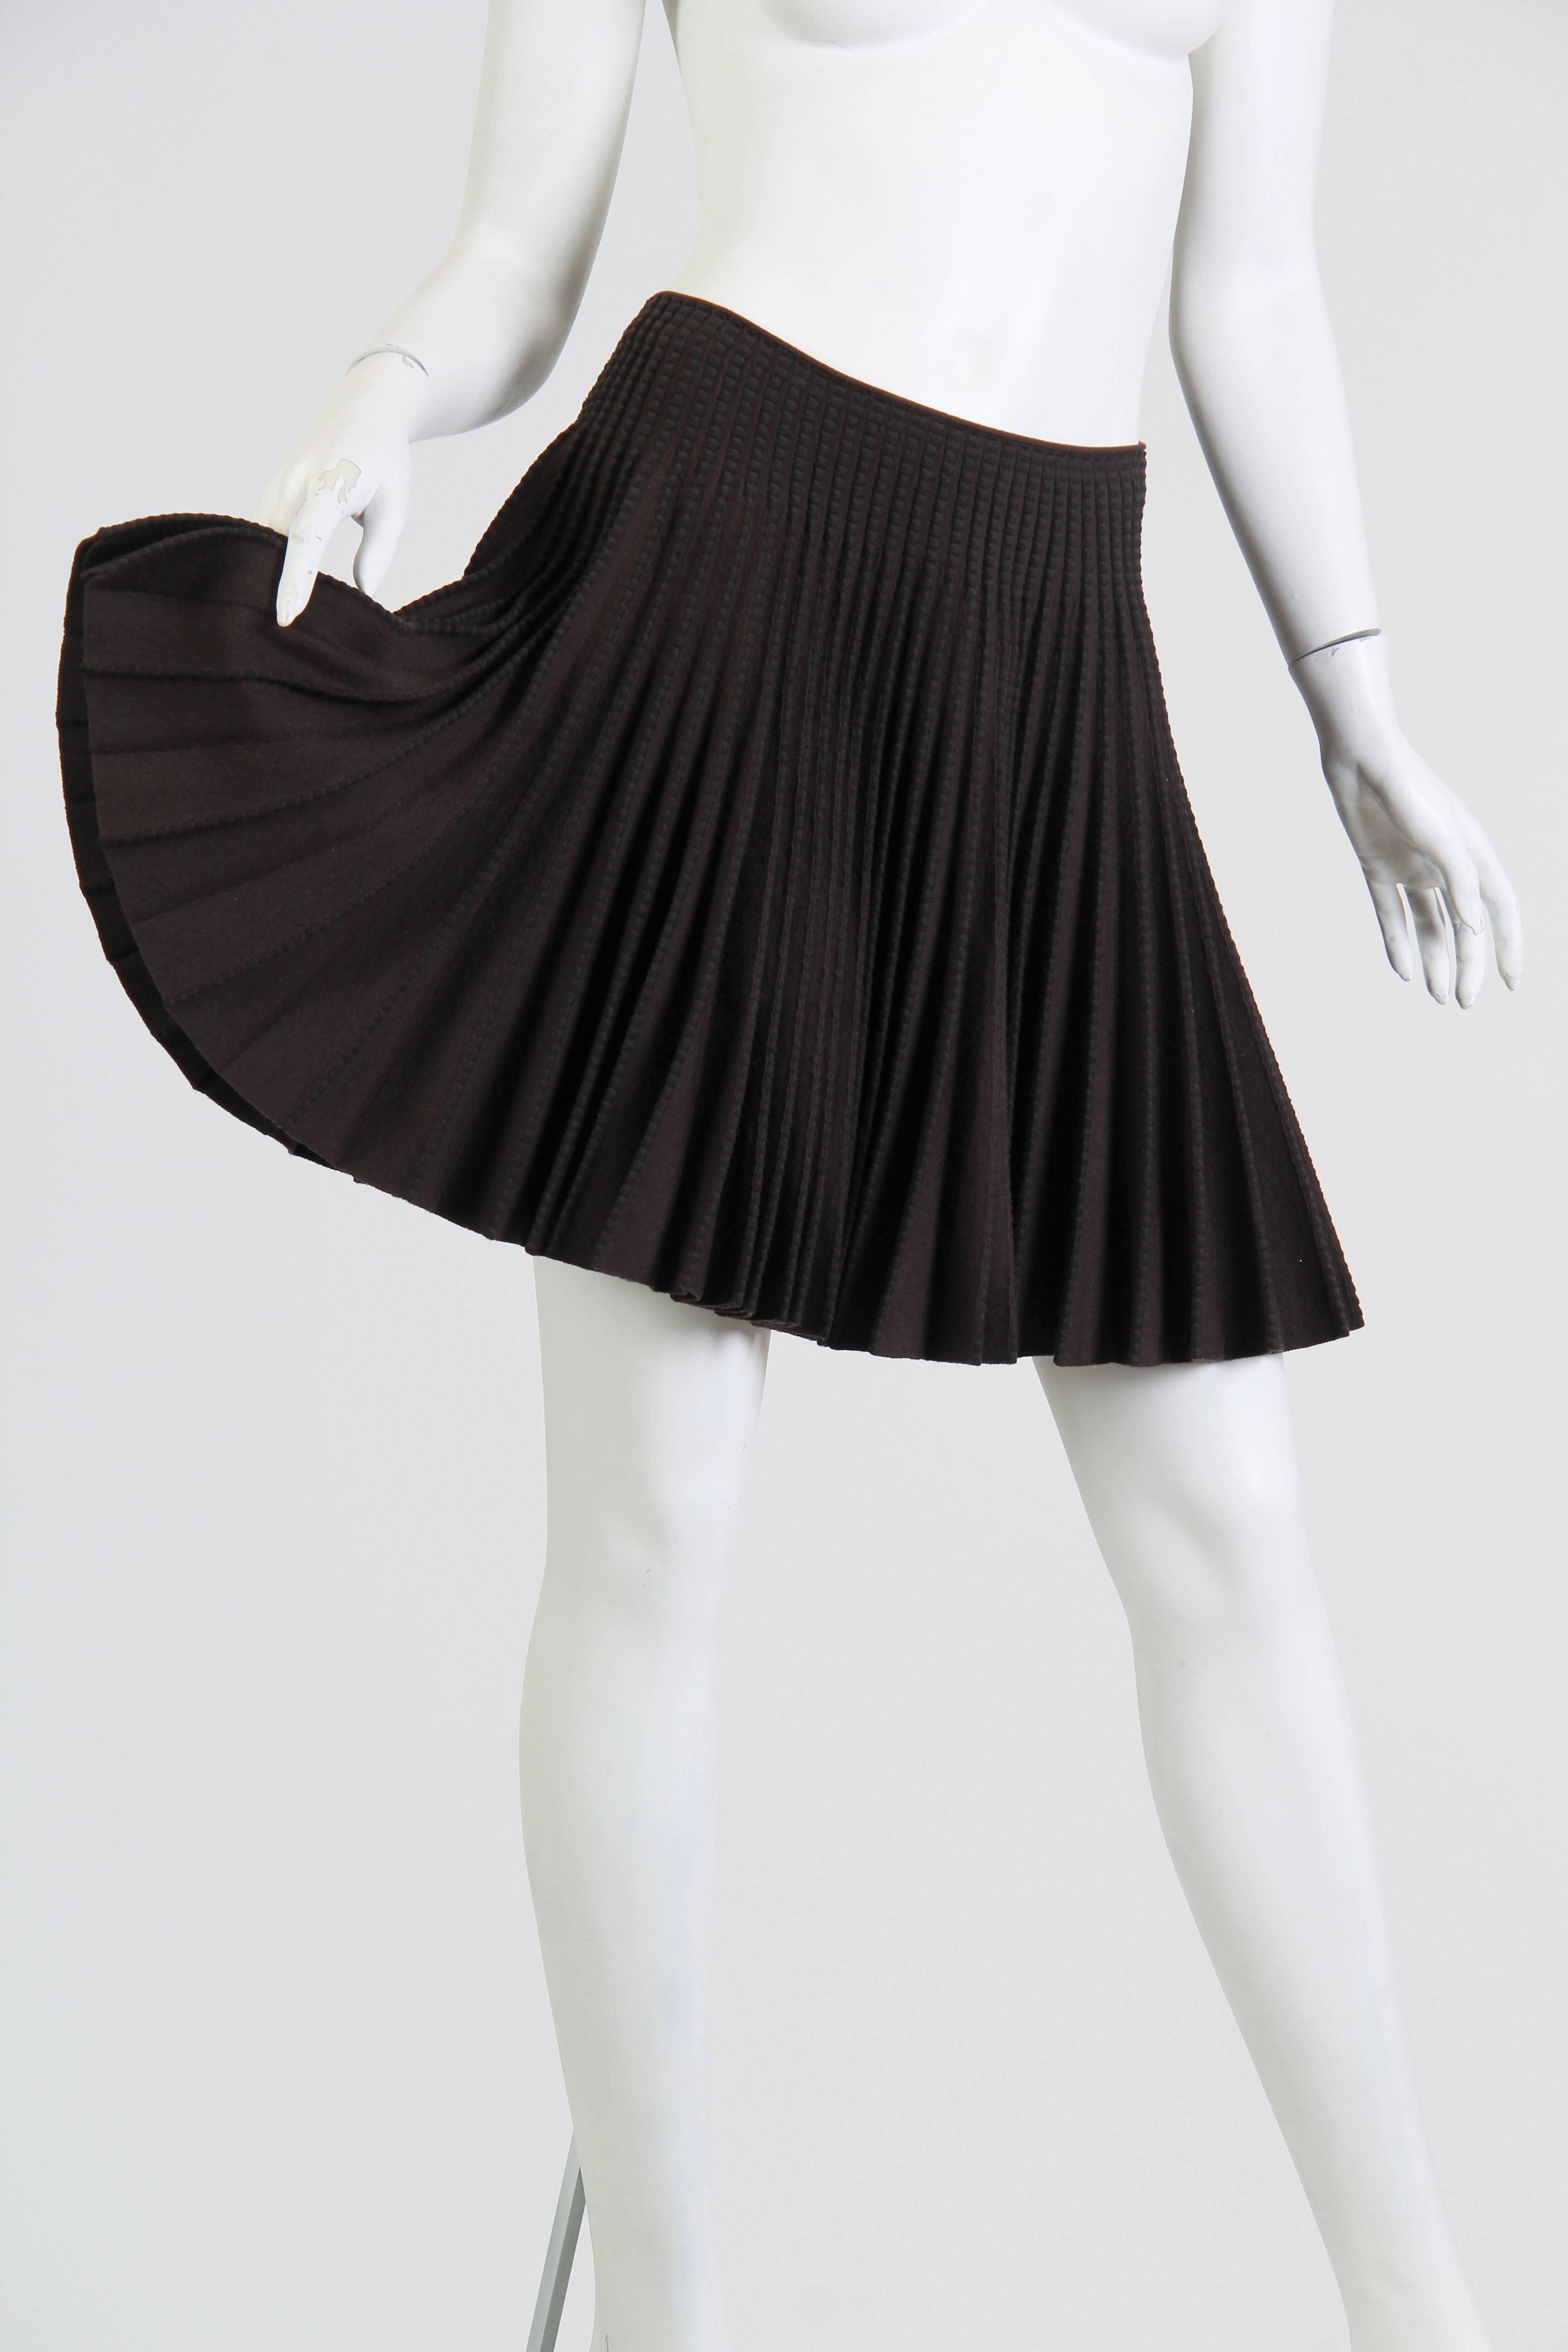 1990S AZZEDINE ALAIA Chocolate Brown & Black Rayon Blend Knit Ra-Ra Skirt For Sale 1